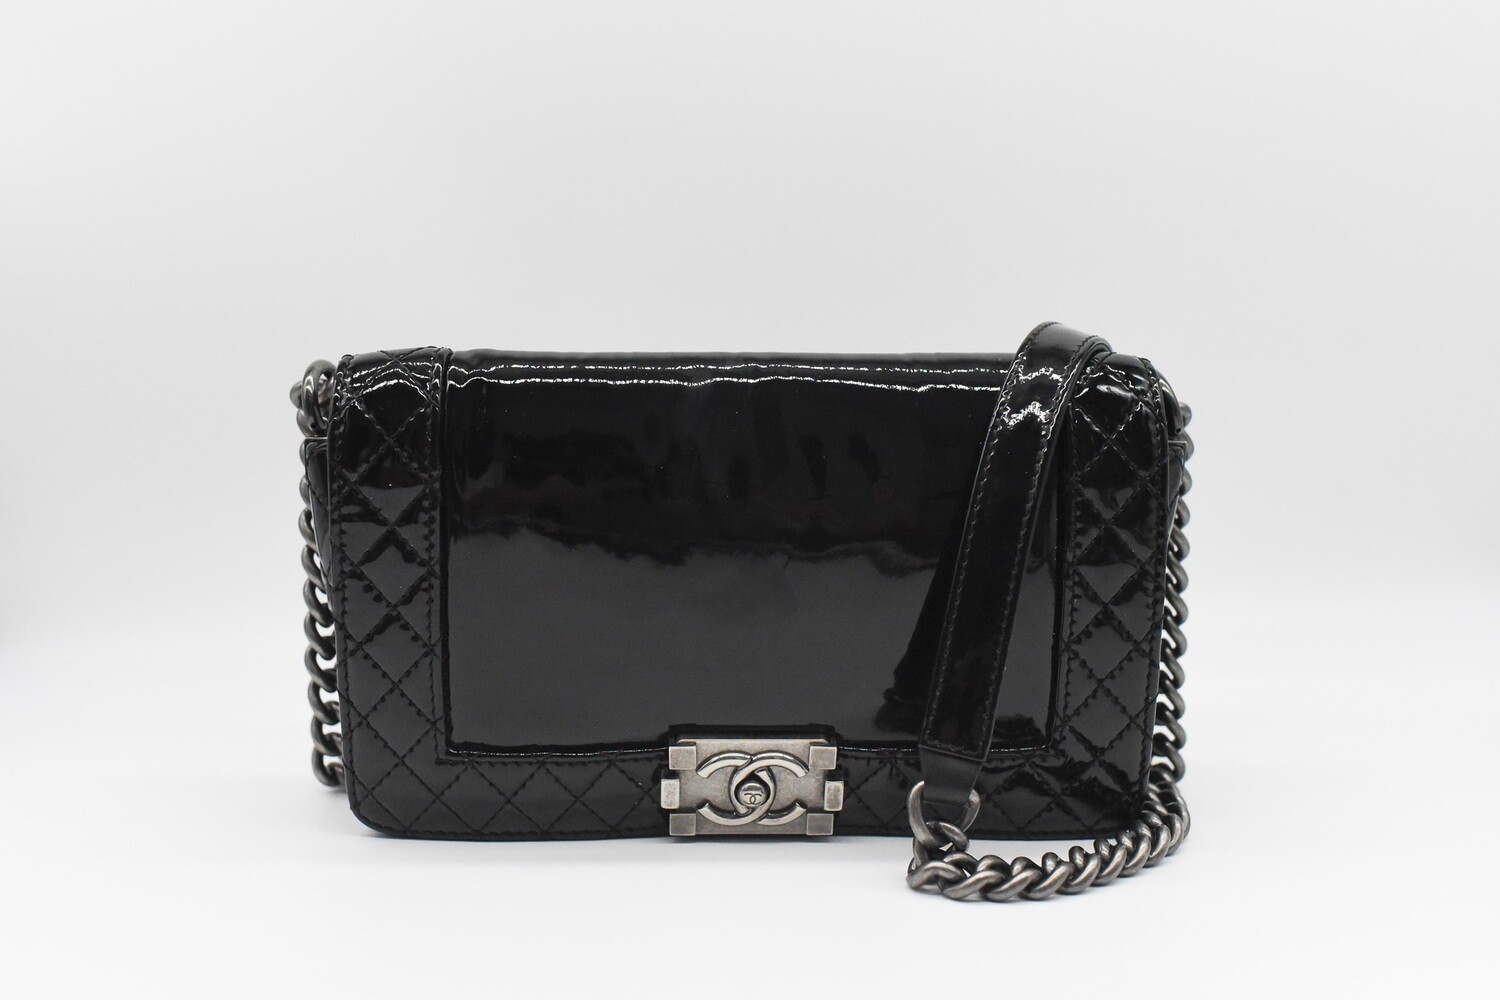 Ariadna Gutiérrez Closet Sale: Chanel Boy, Black Patent with Ruthenium  Hardware, Preowned in Dustbag MA004